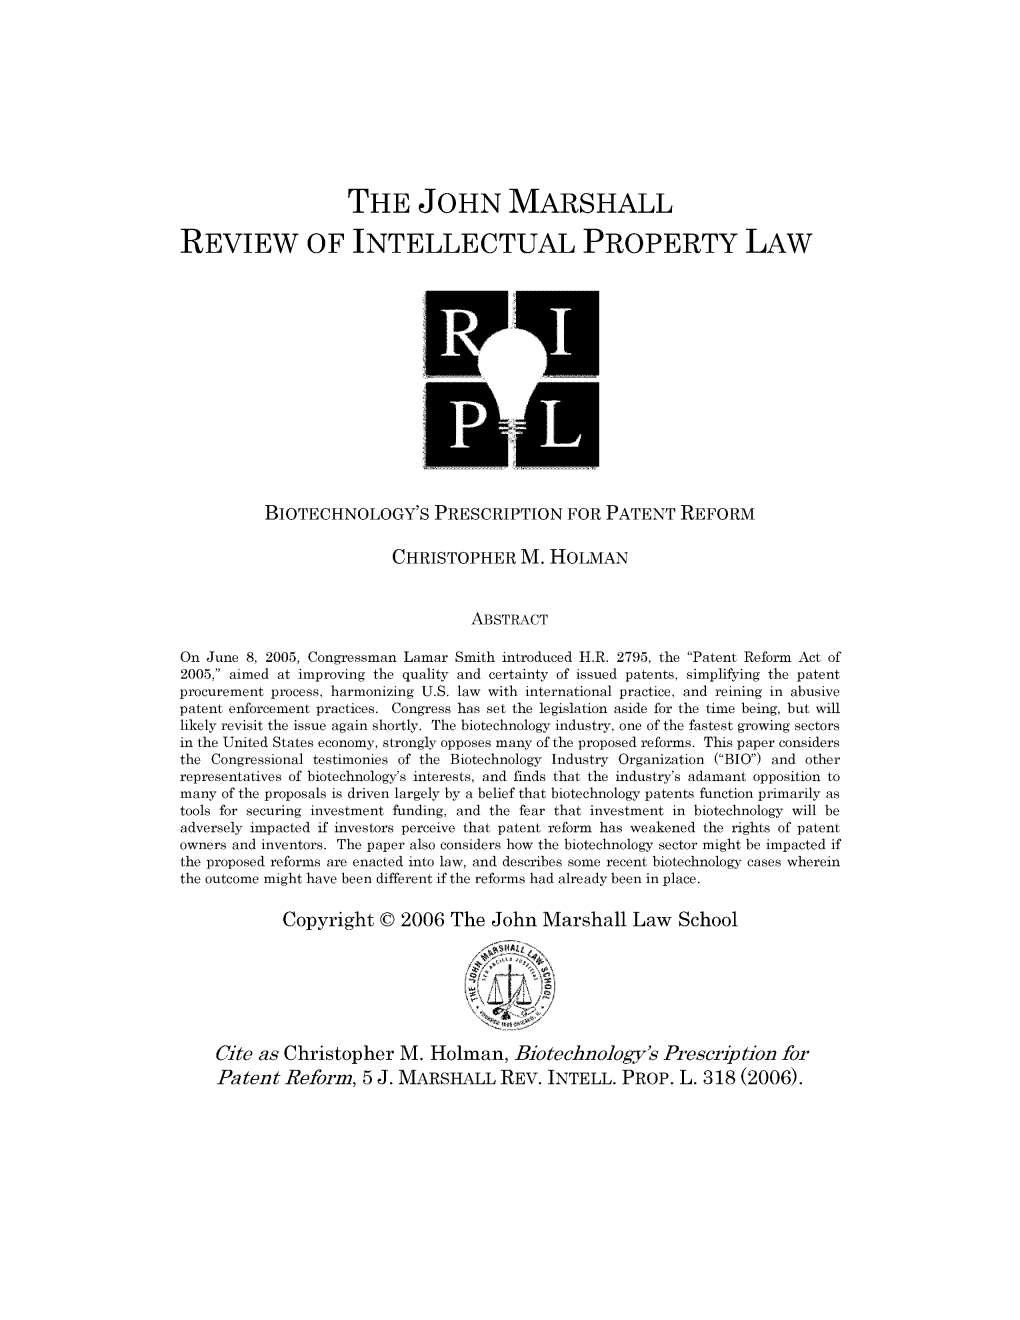 Biotechnology's Prescription for Patent Reform, 5 J. Marshall Rev. Intell